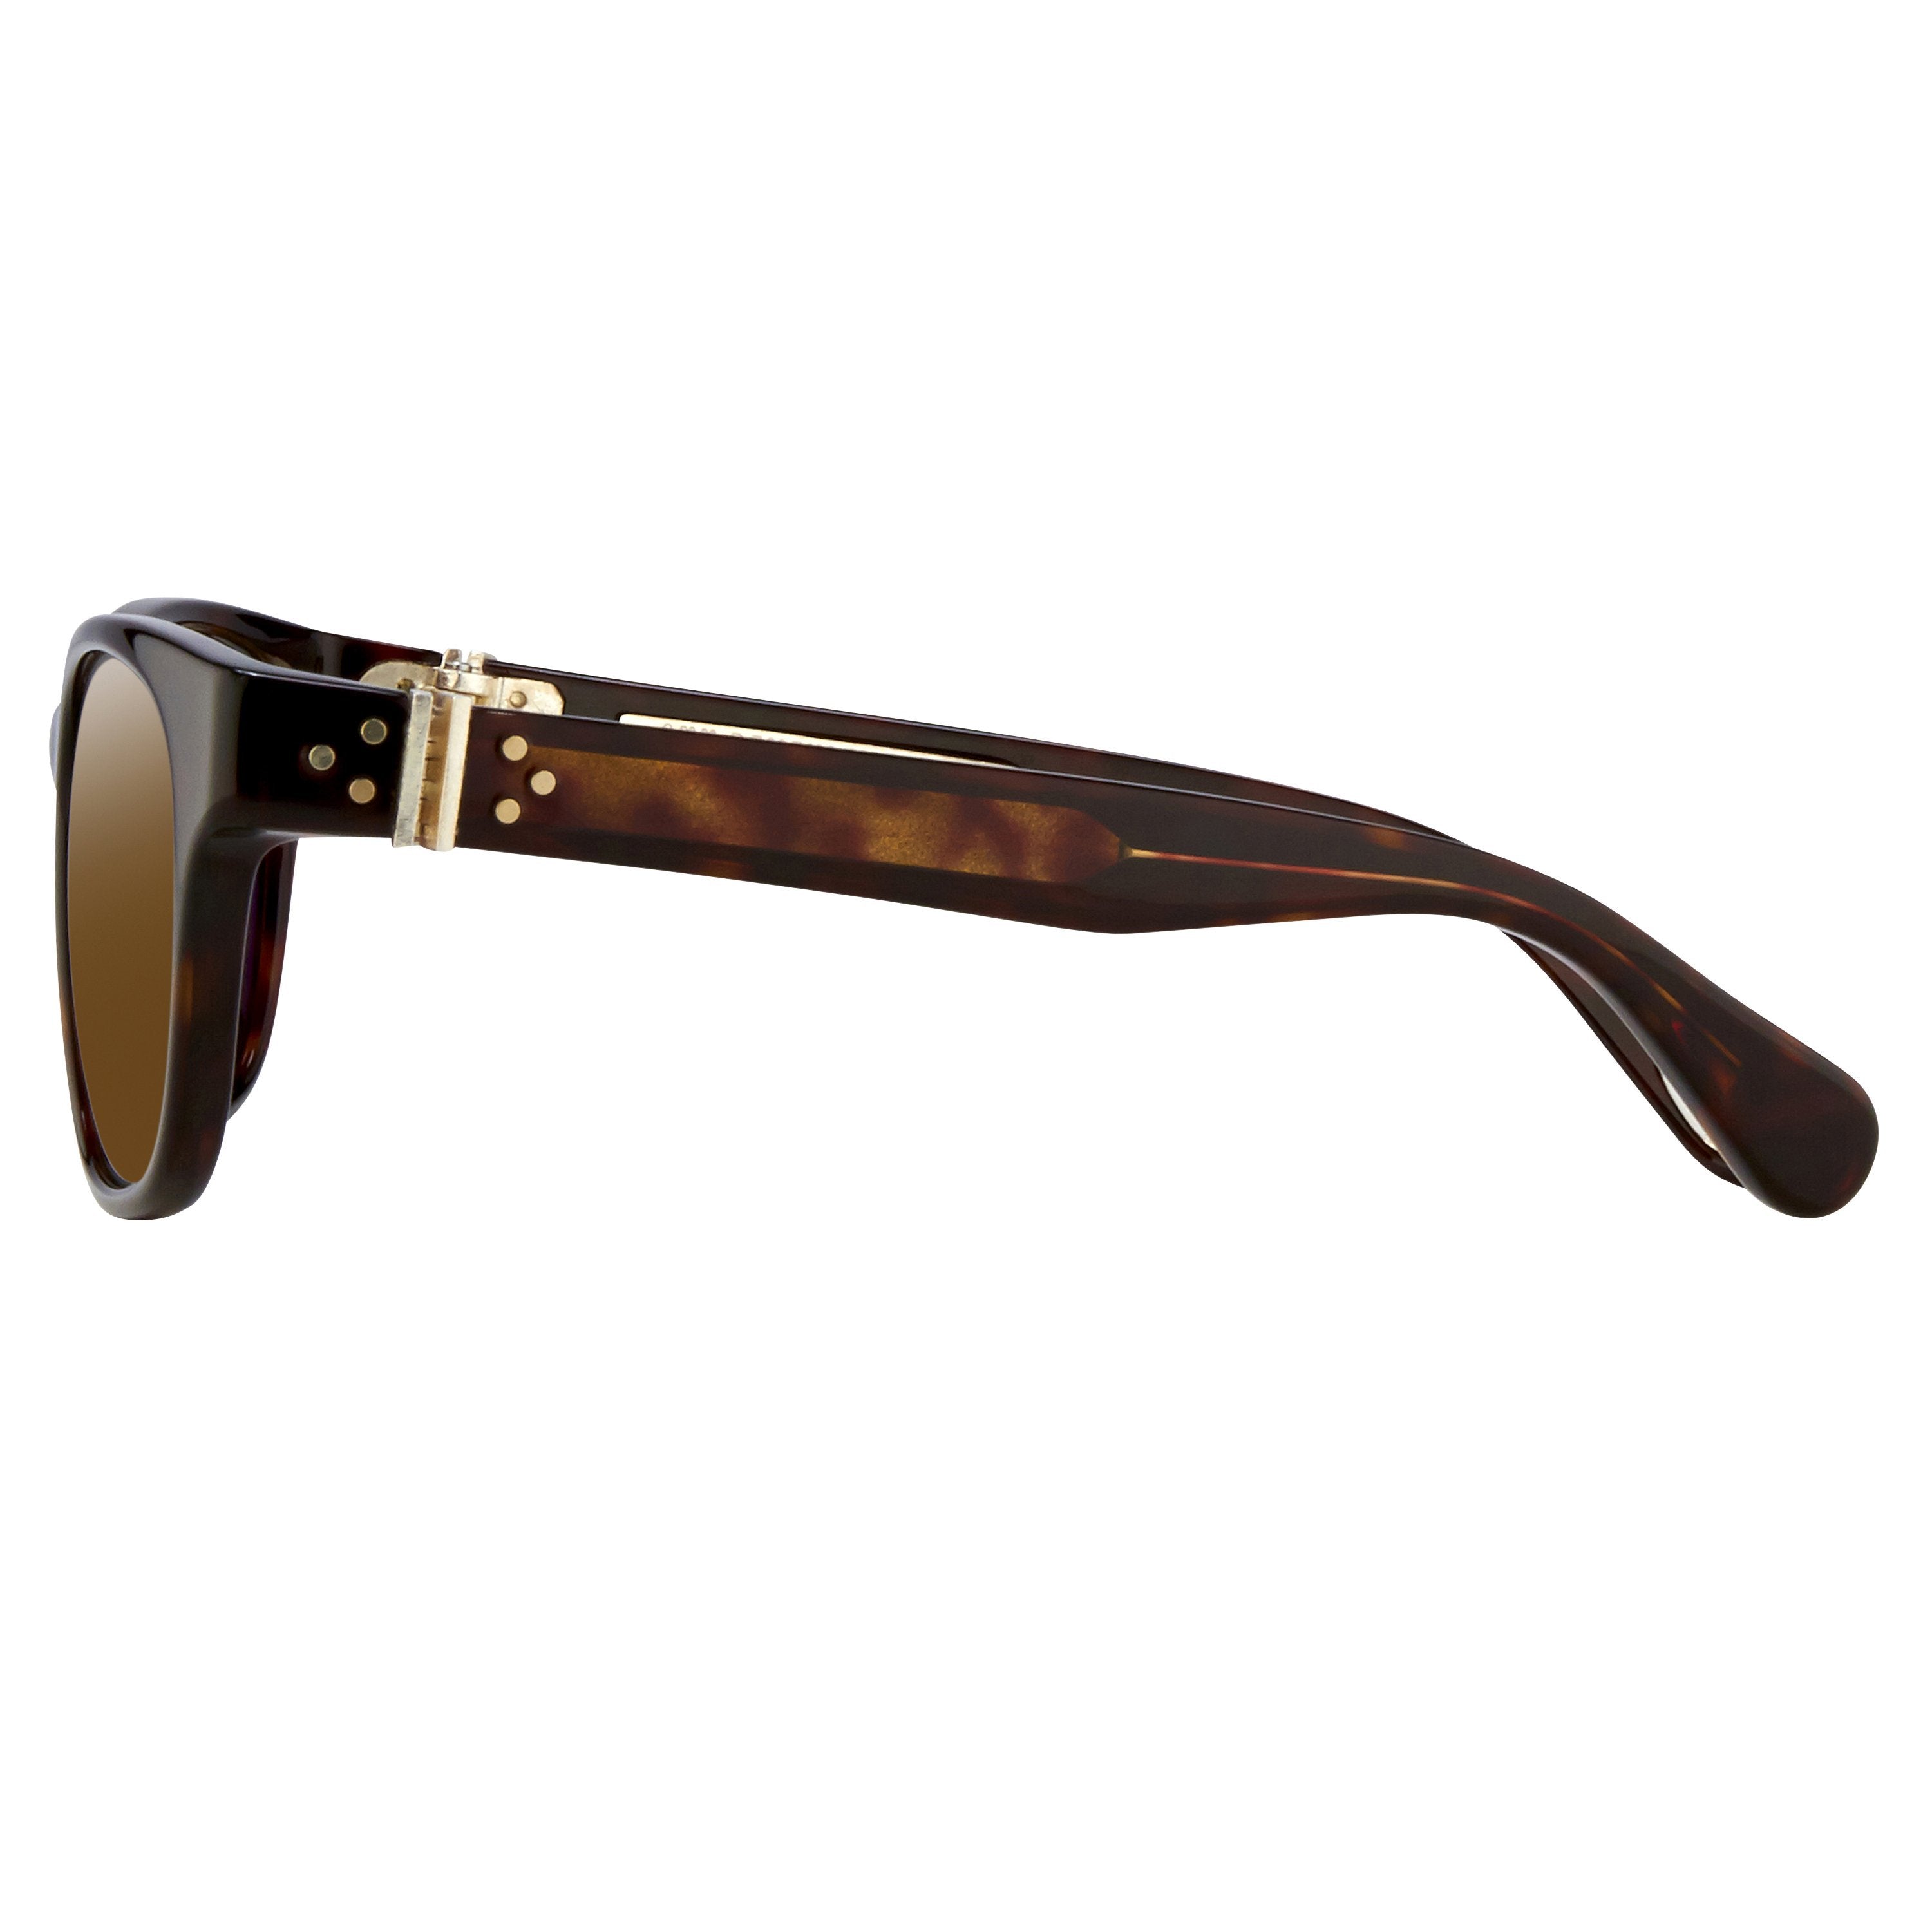 Color_AD15C9SUN - Ann Demeulemeester 15 C9 Rectangular Sunglasses